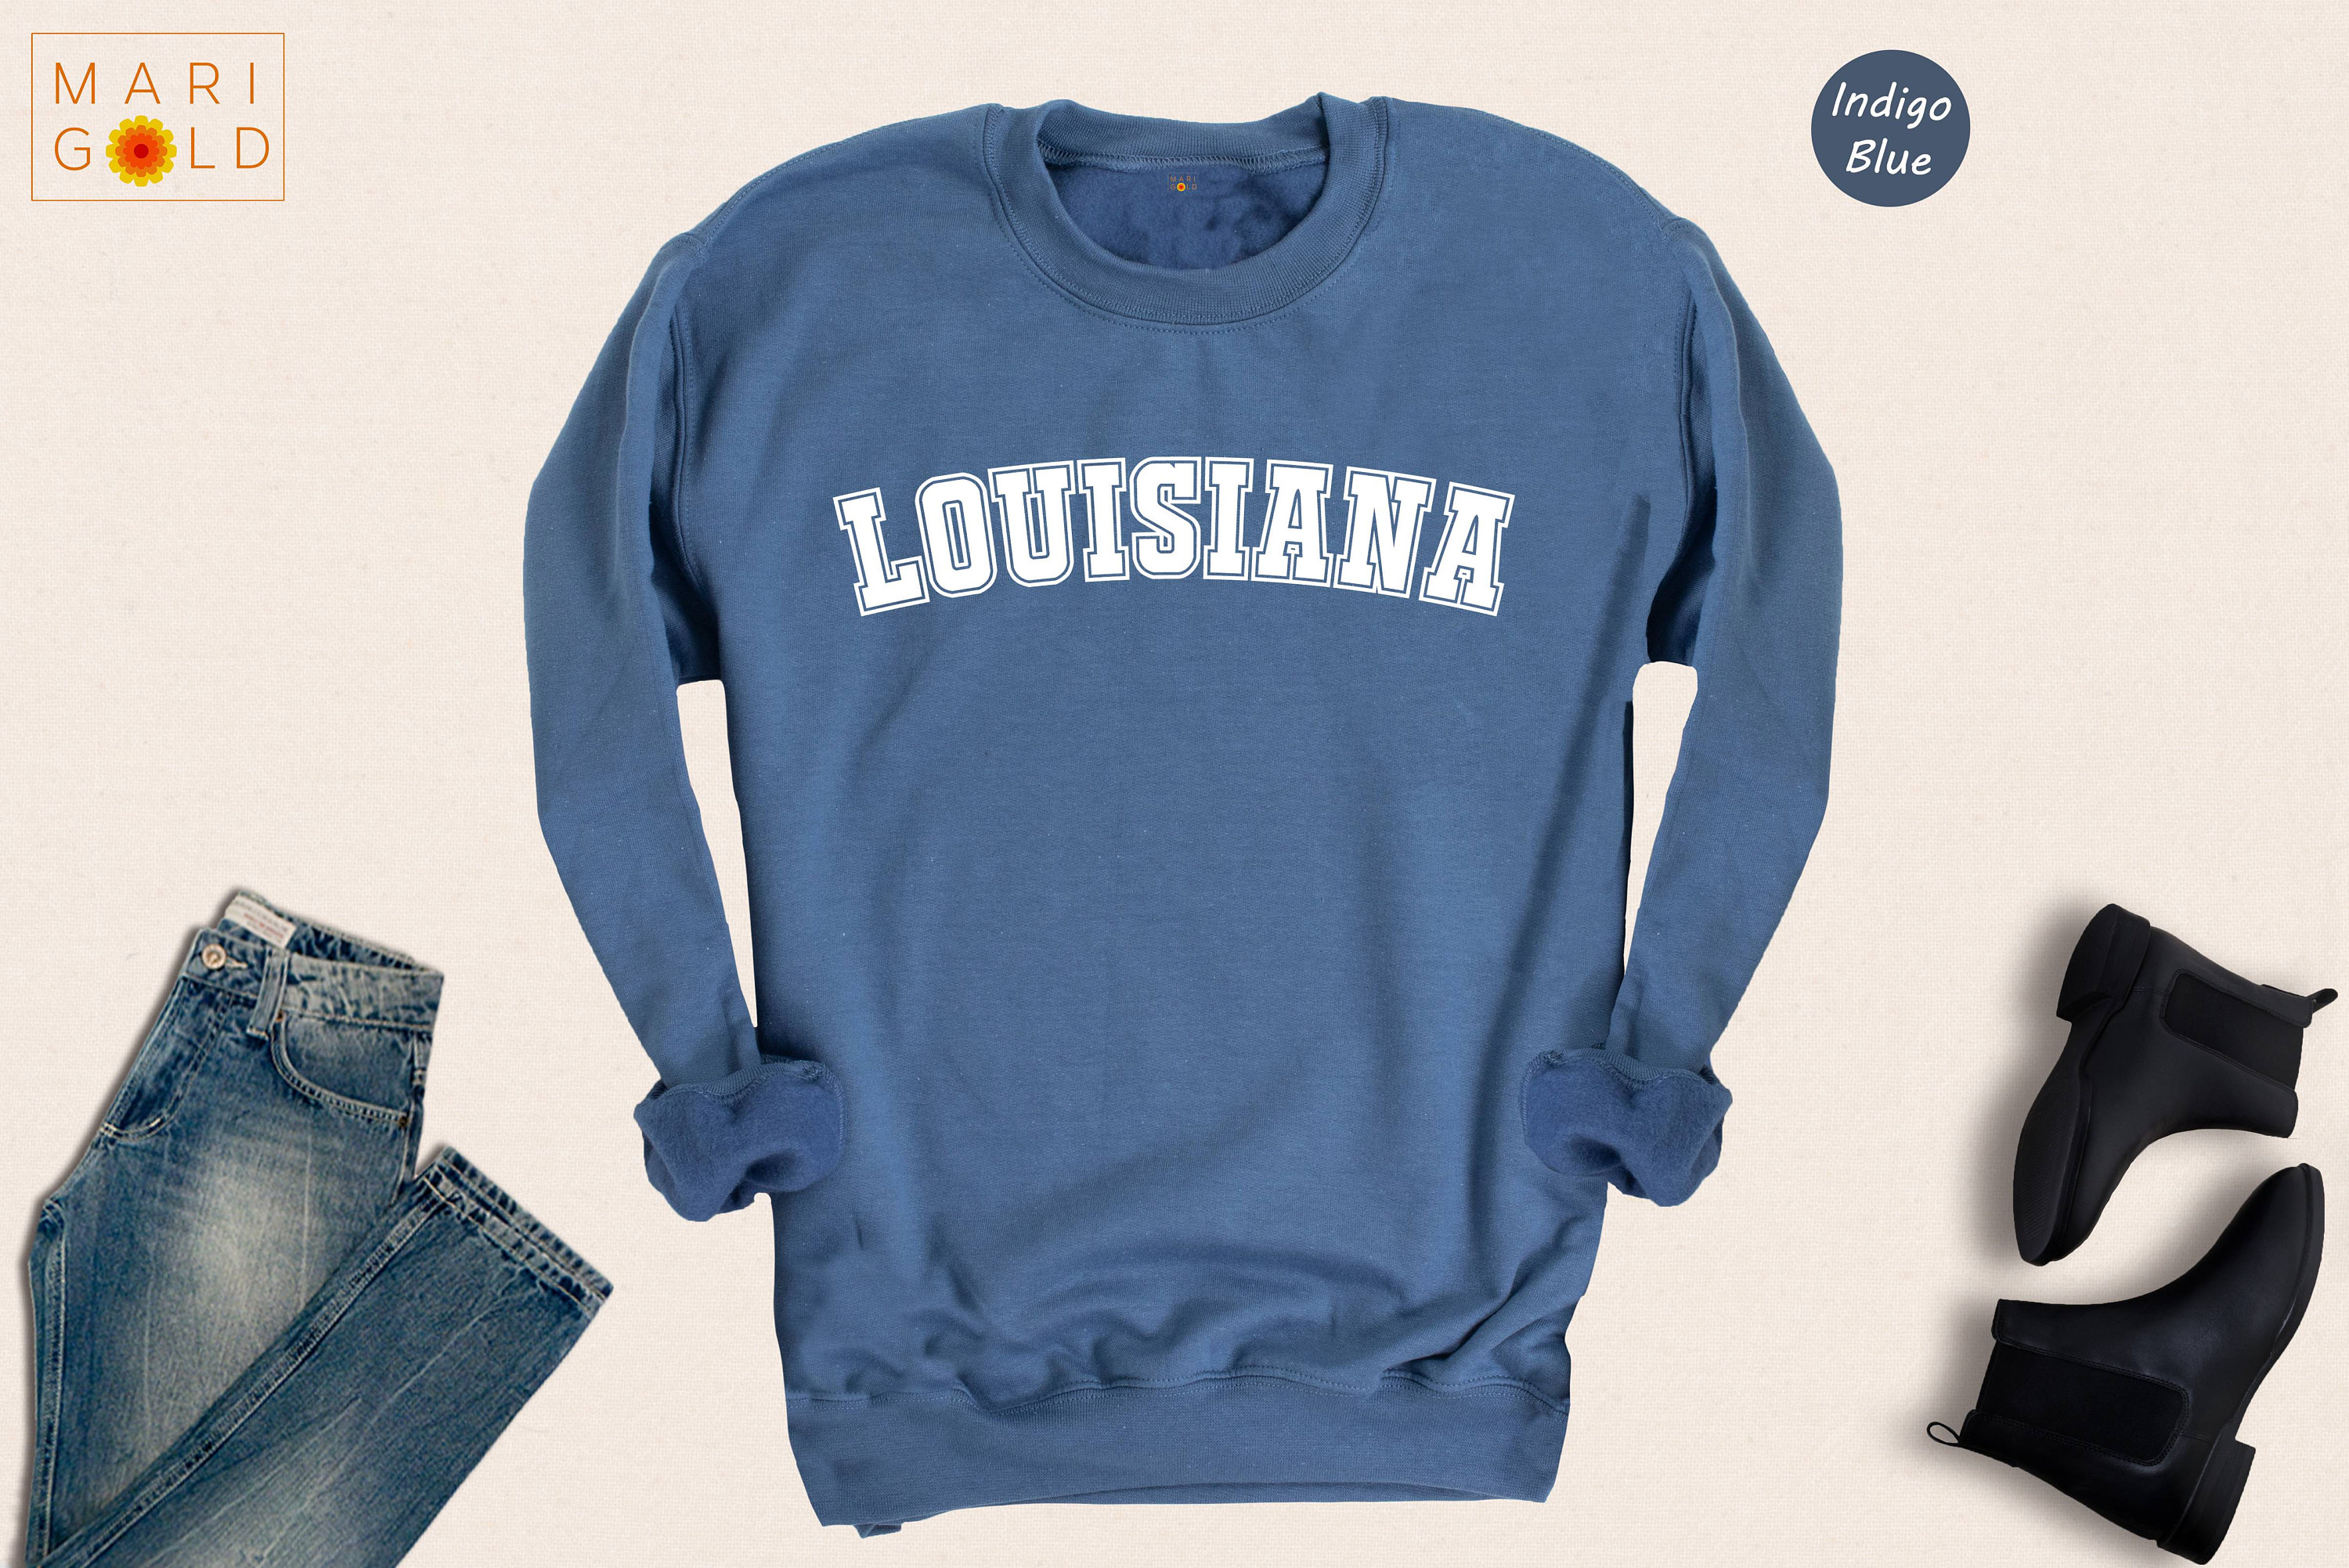 TheFunkySoul Louisiana State Hooded Sweatshirt